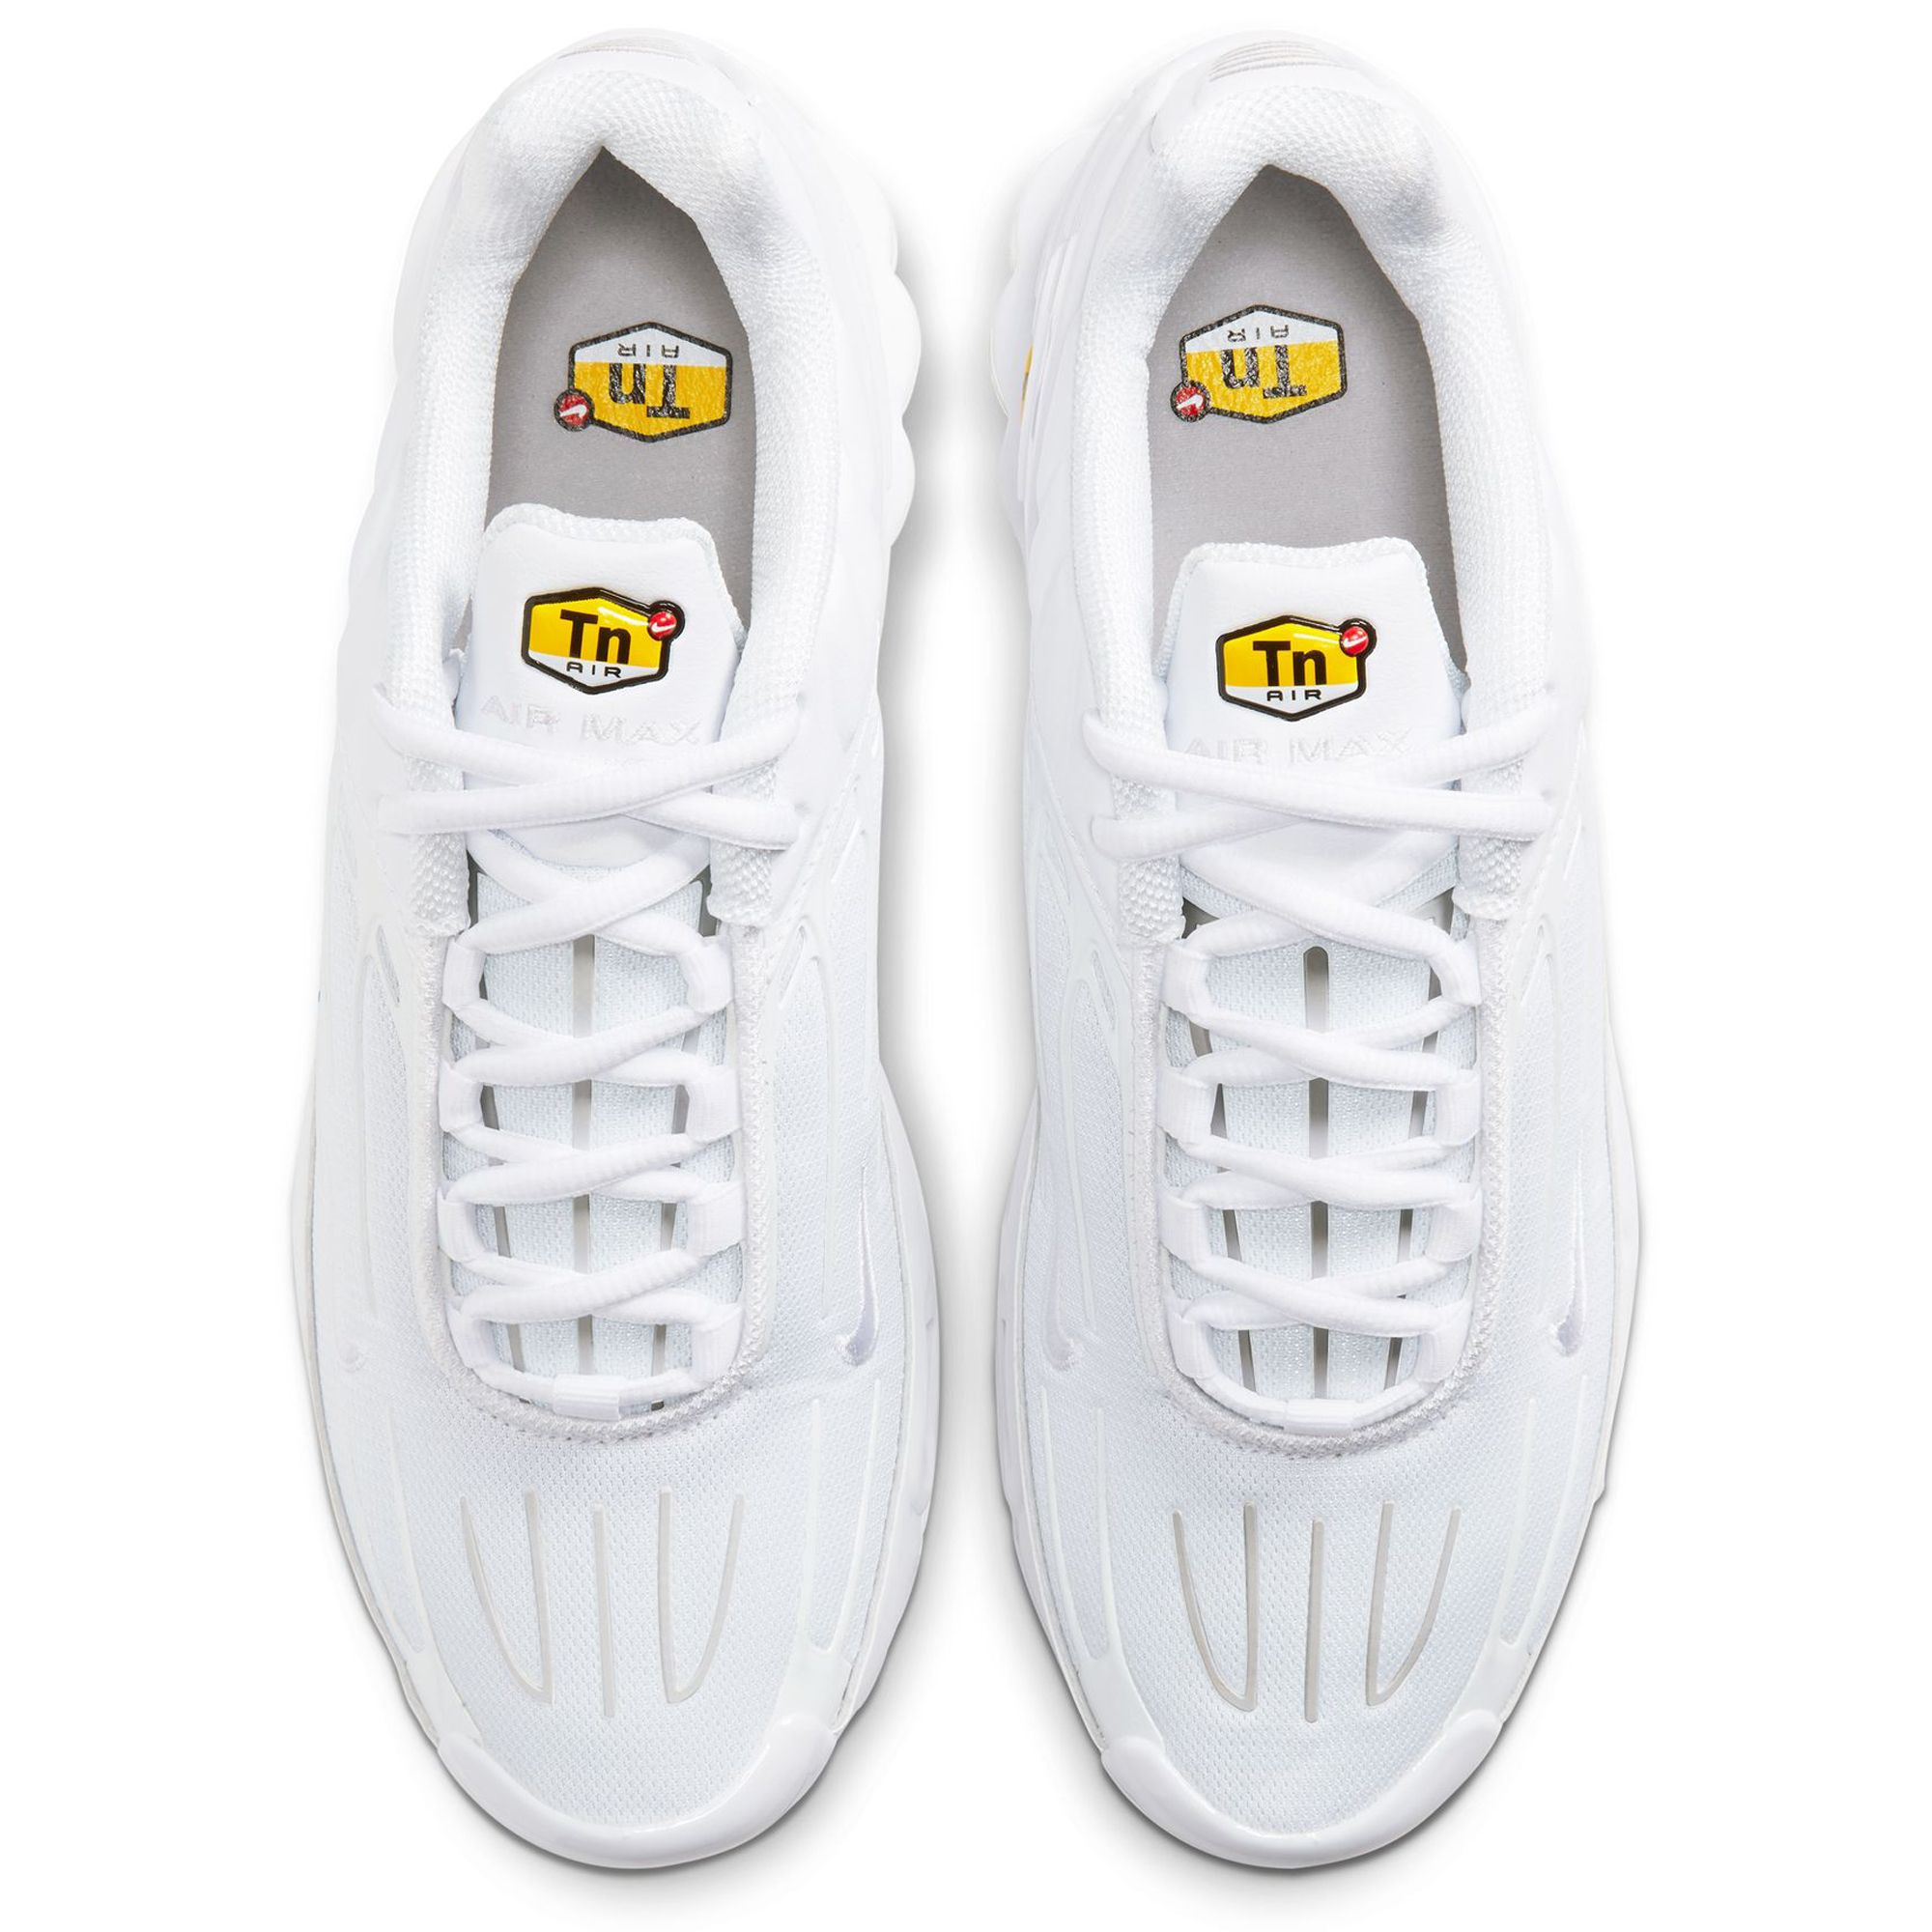 Nike CW1417-100 Air Max Plus III Mens Lifestyle Shoe - White/White